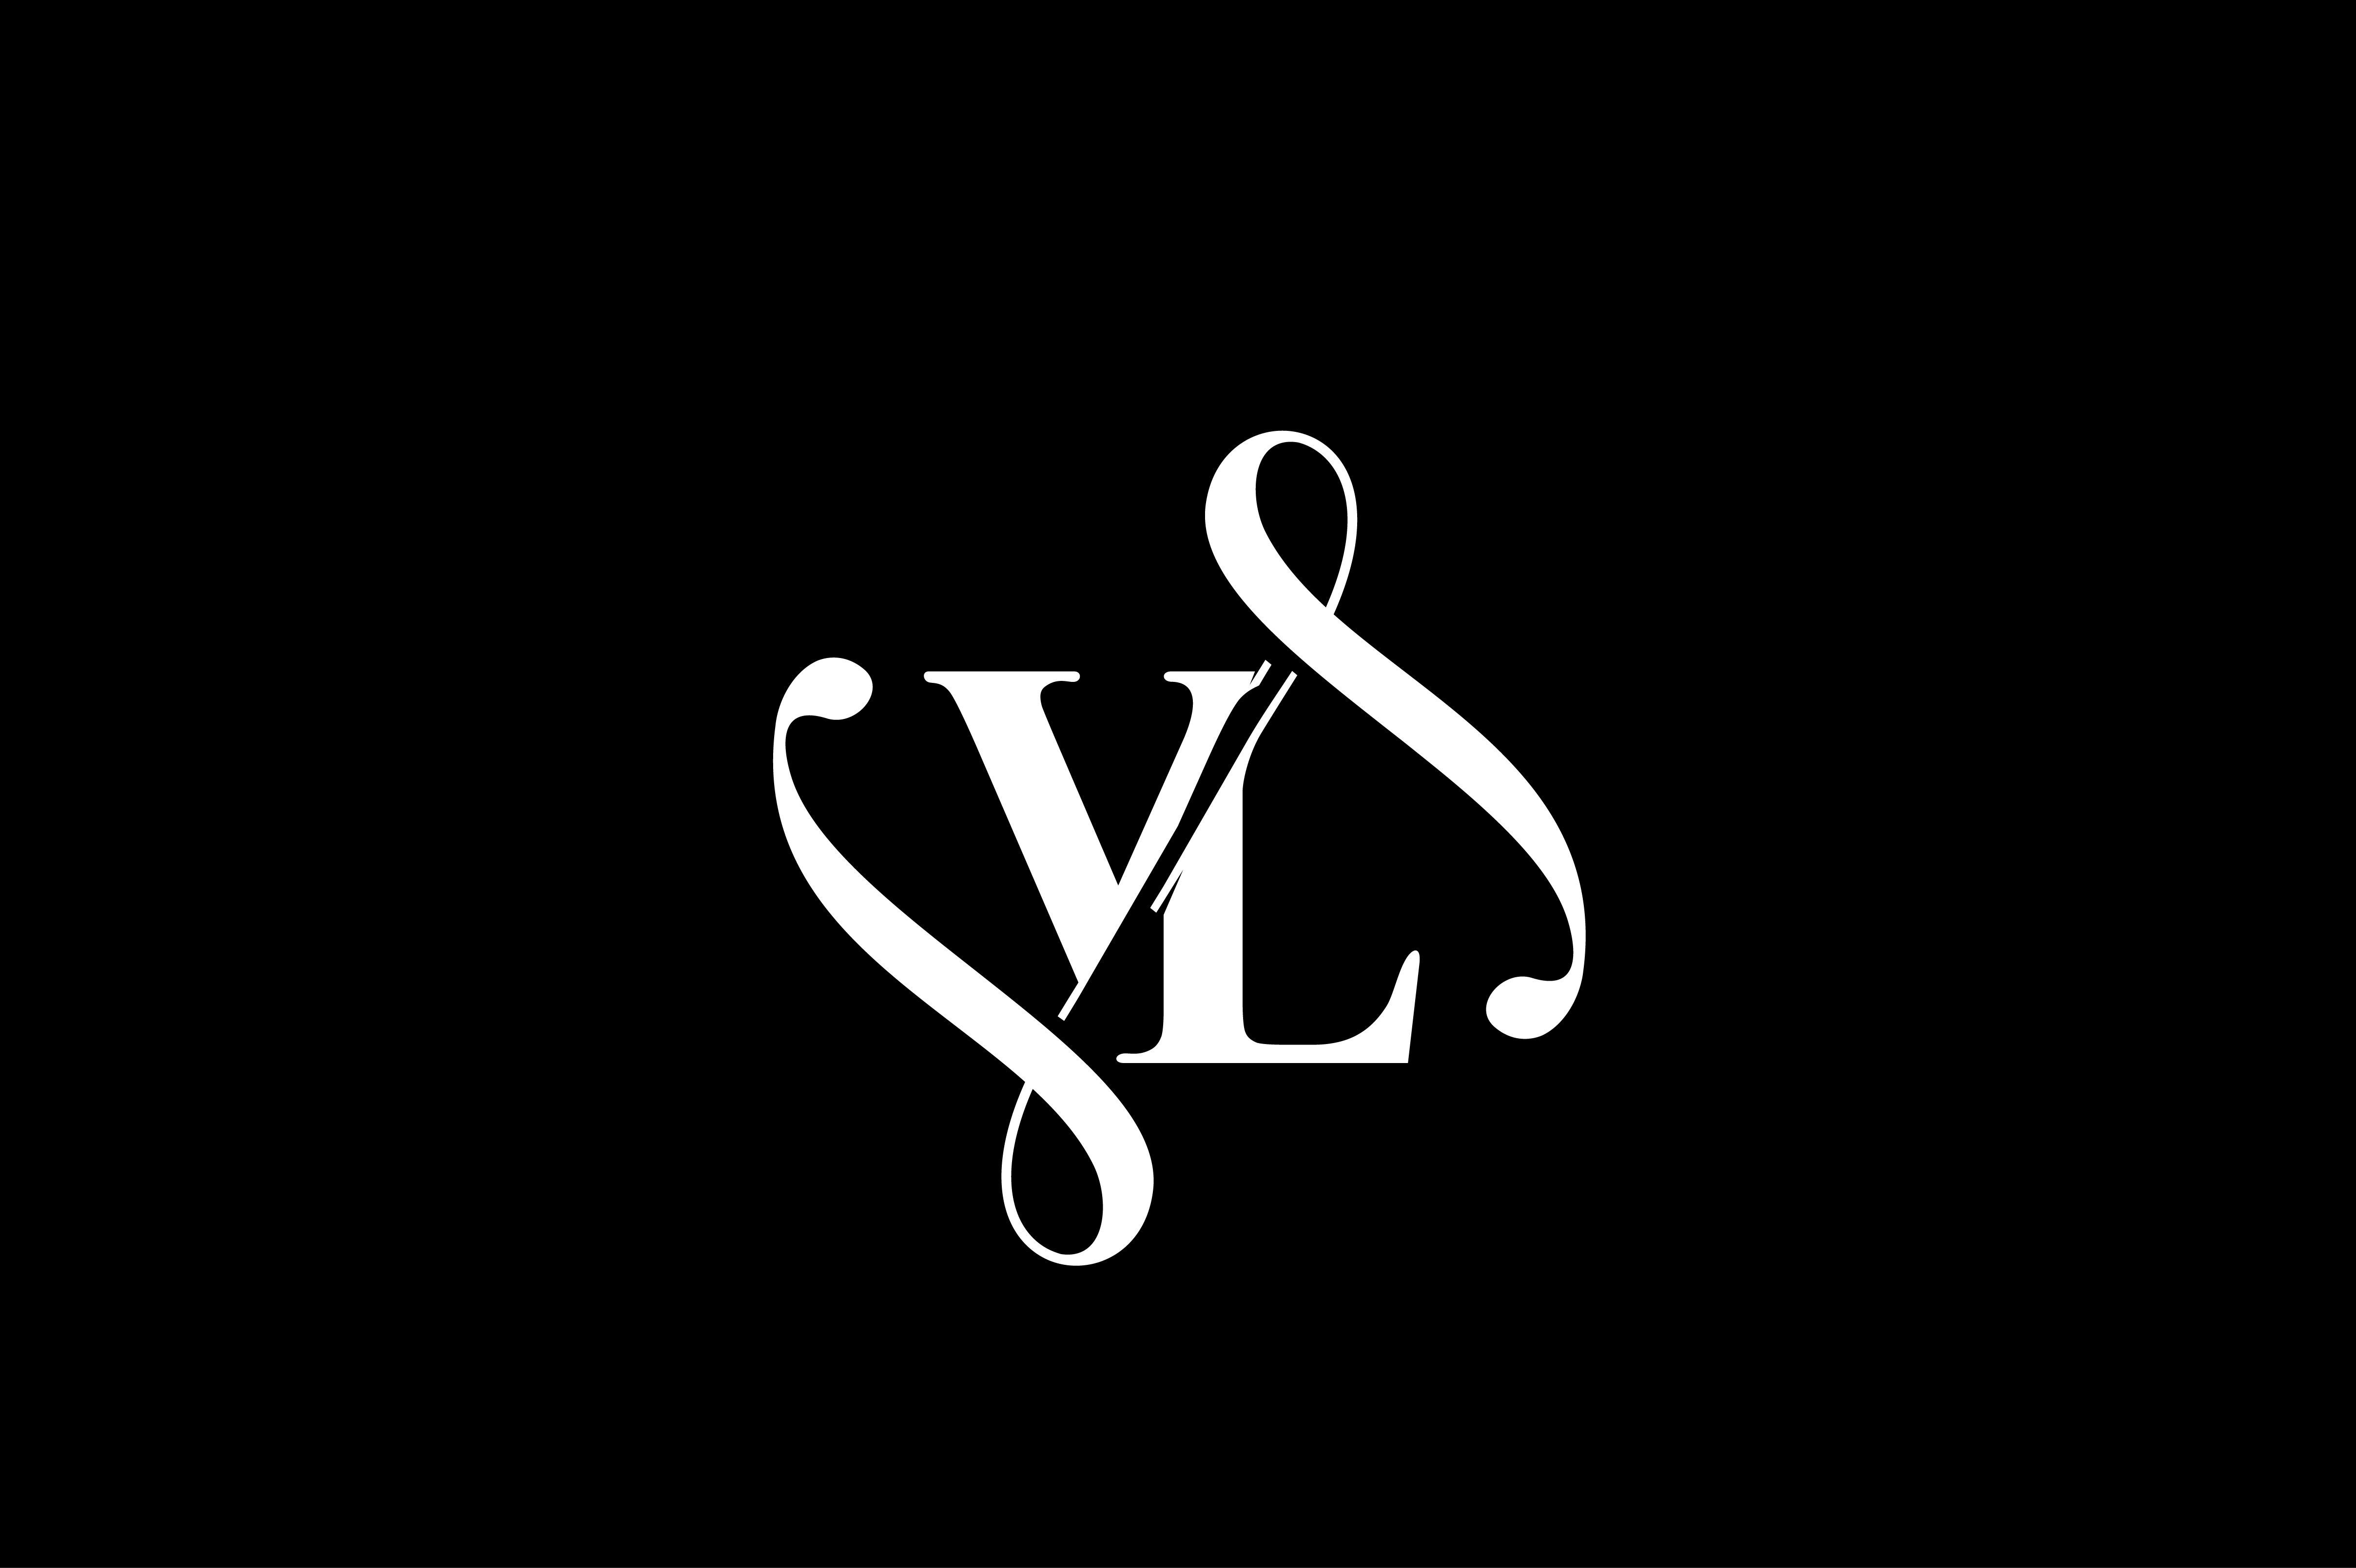 Vl Logo Vector Images (over 1,300)